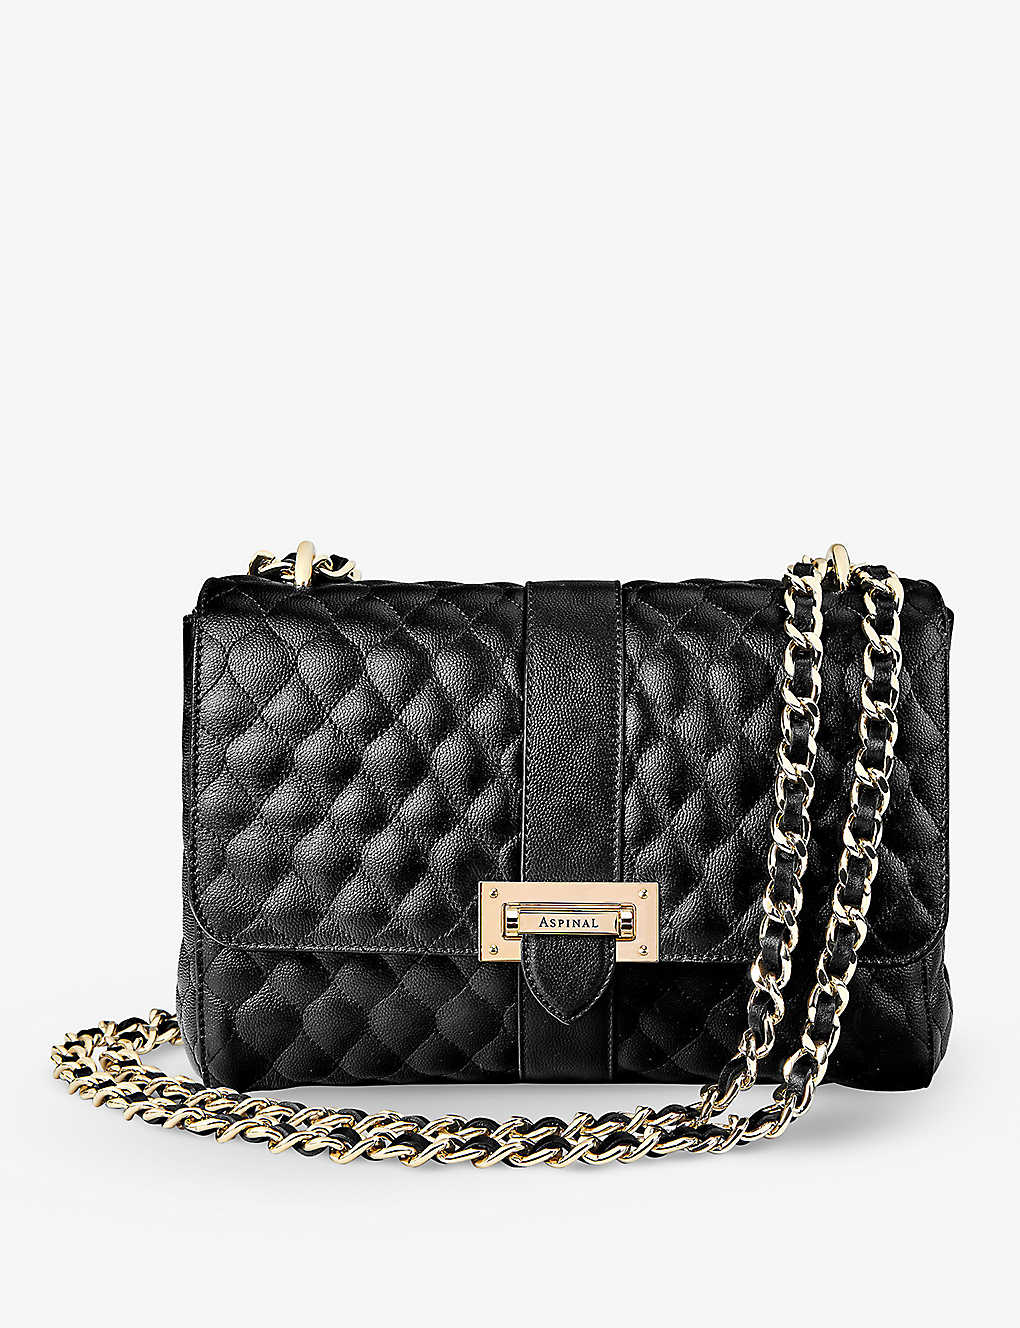 Shop Aspinal Of London Women's Black Lottie Large Quilted Leather Shoulder Bag